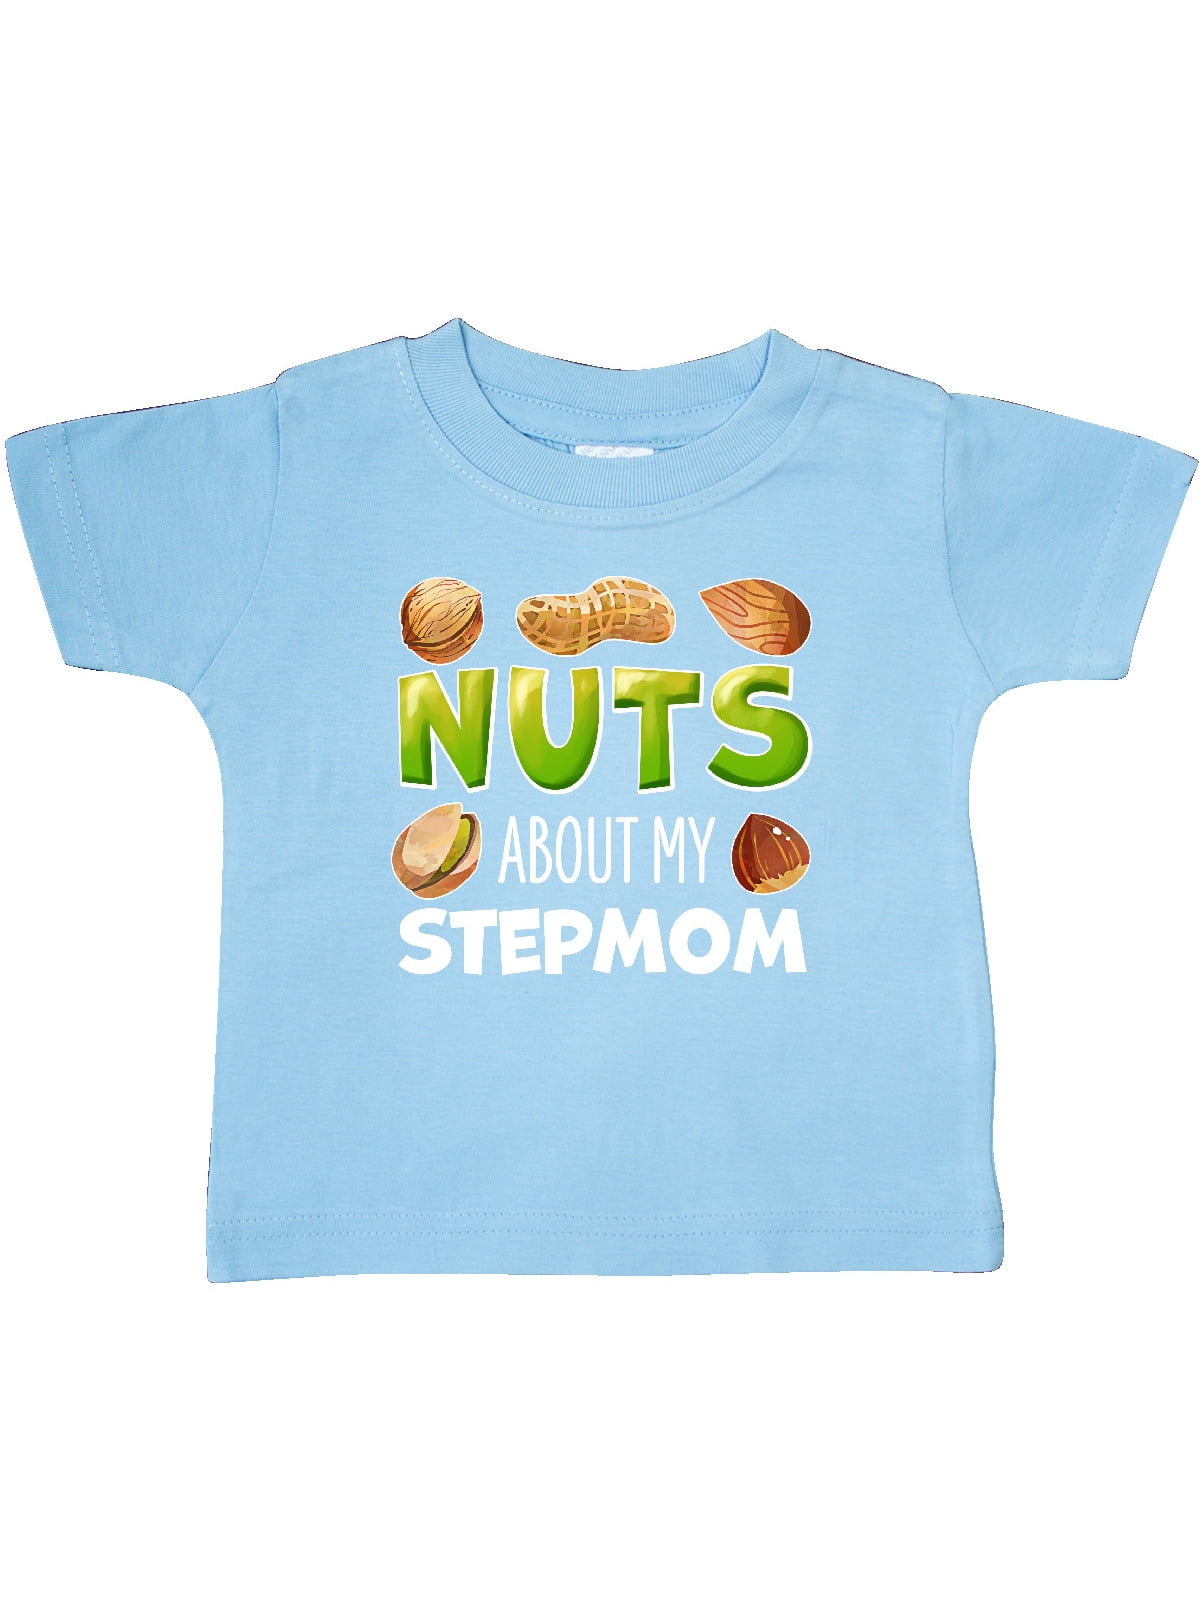 Inktastic Nuts About My Stepmom Peanut Almond Pistachio Tote Bag 